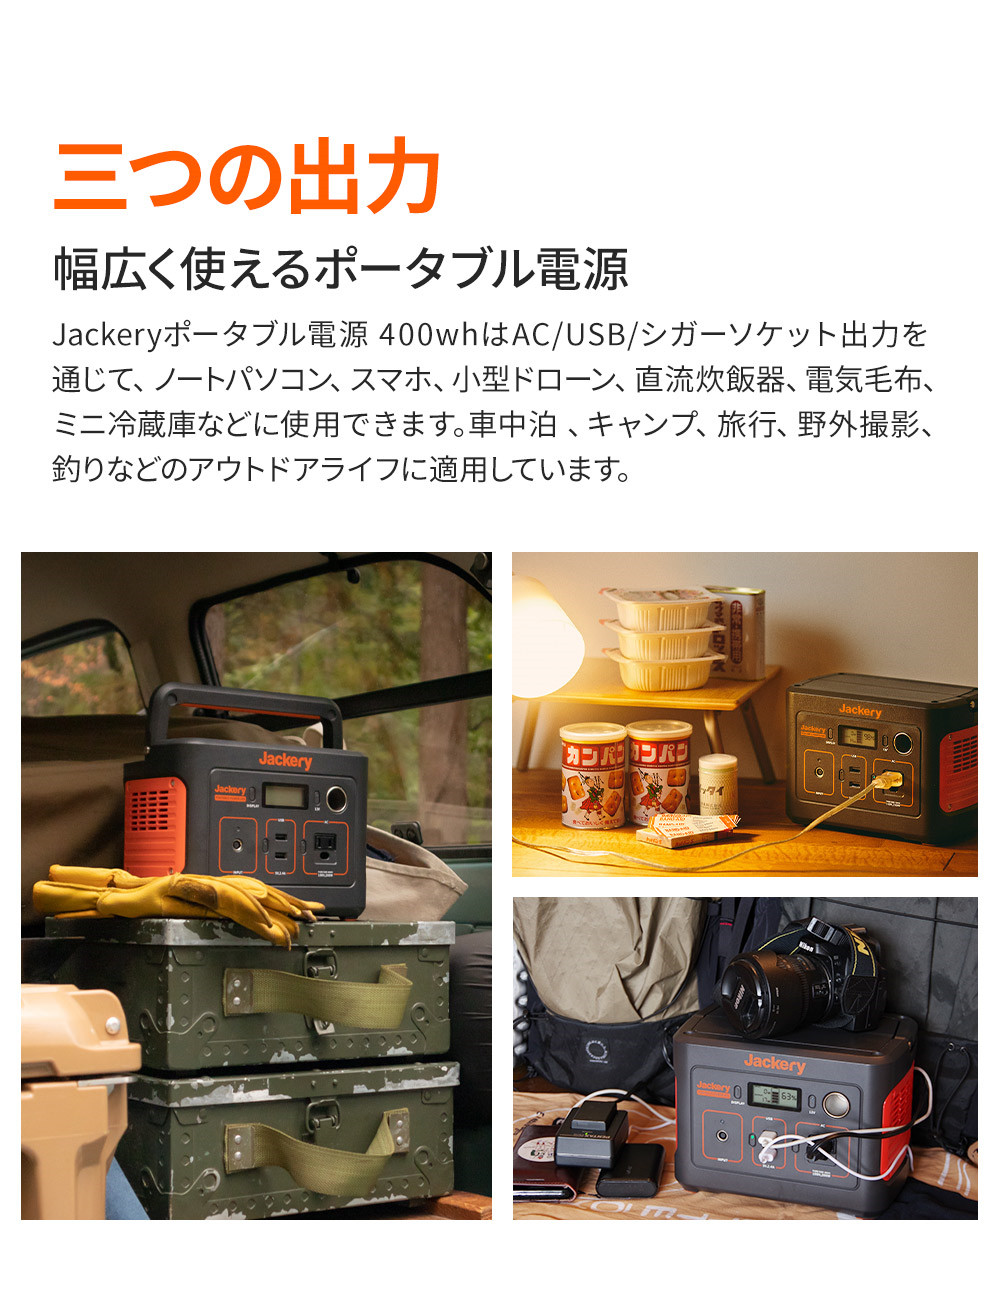 Jackery Jackery ポータブル電源 400